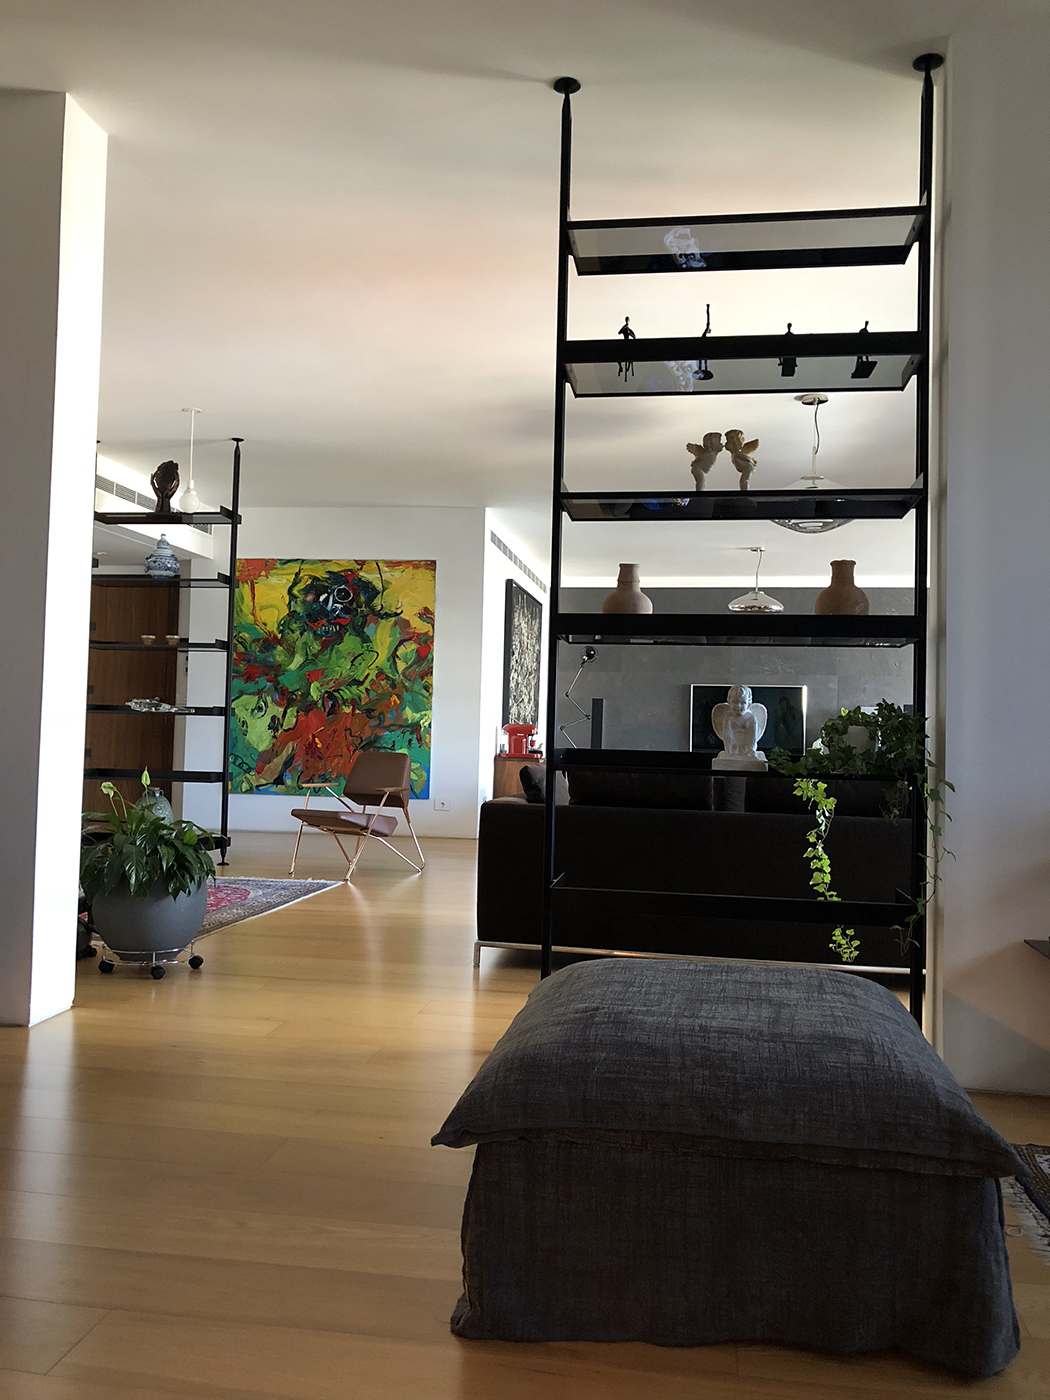 MDDM-Architects-Studio-Residential-Apartment-Interior-Design